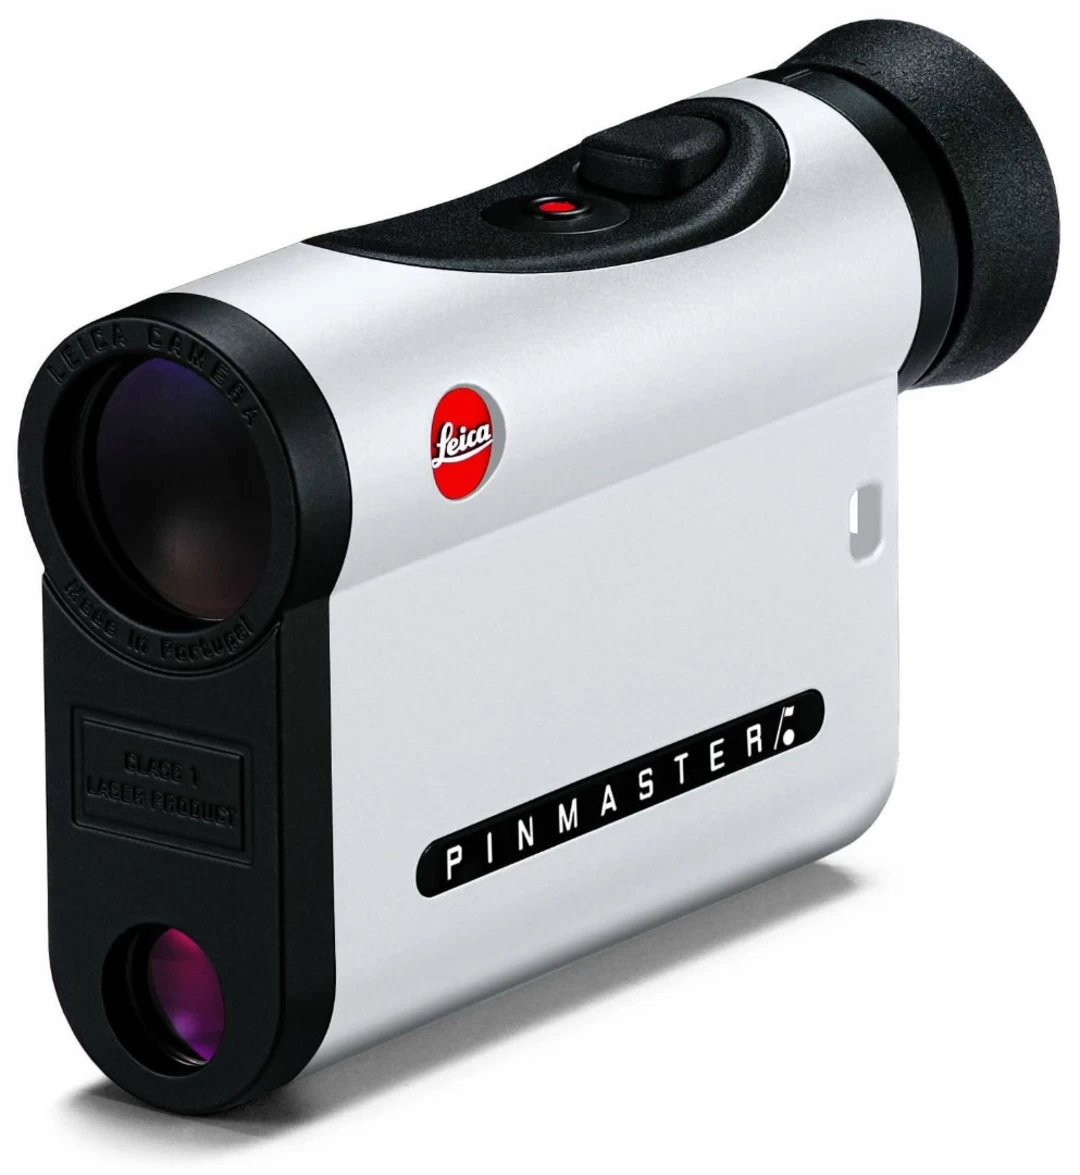 Оптический дальномер Leica Pinmaster II Pro - 1